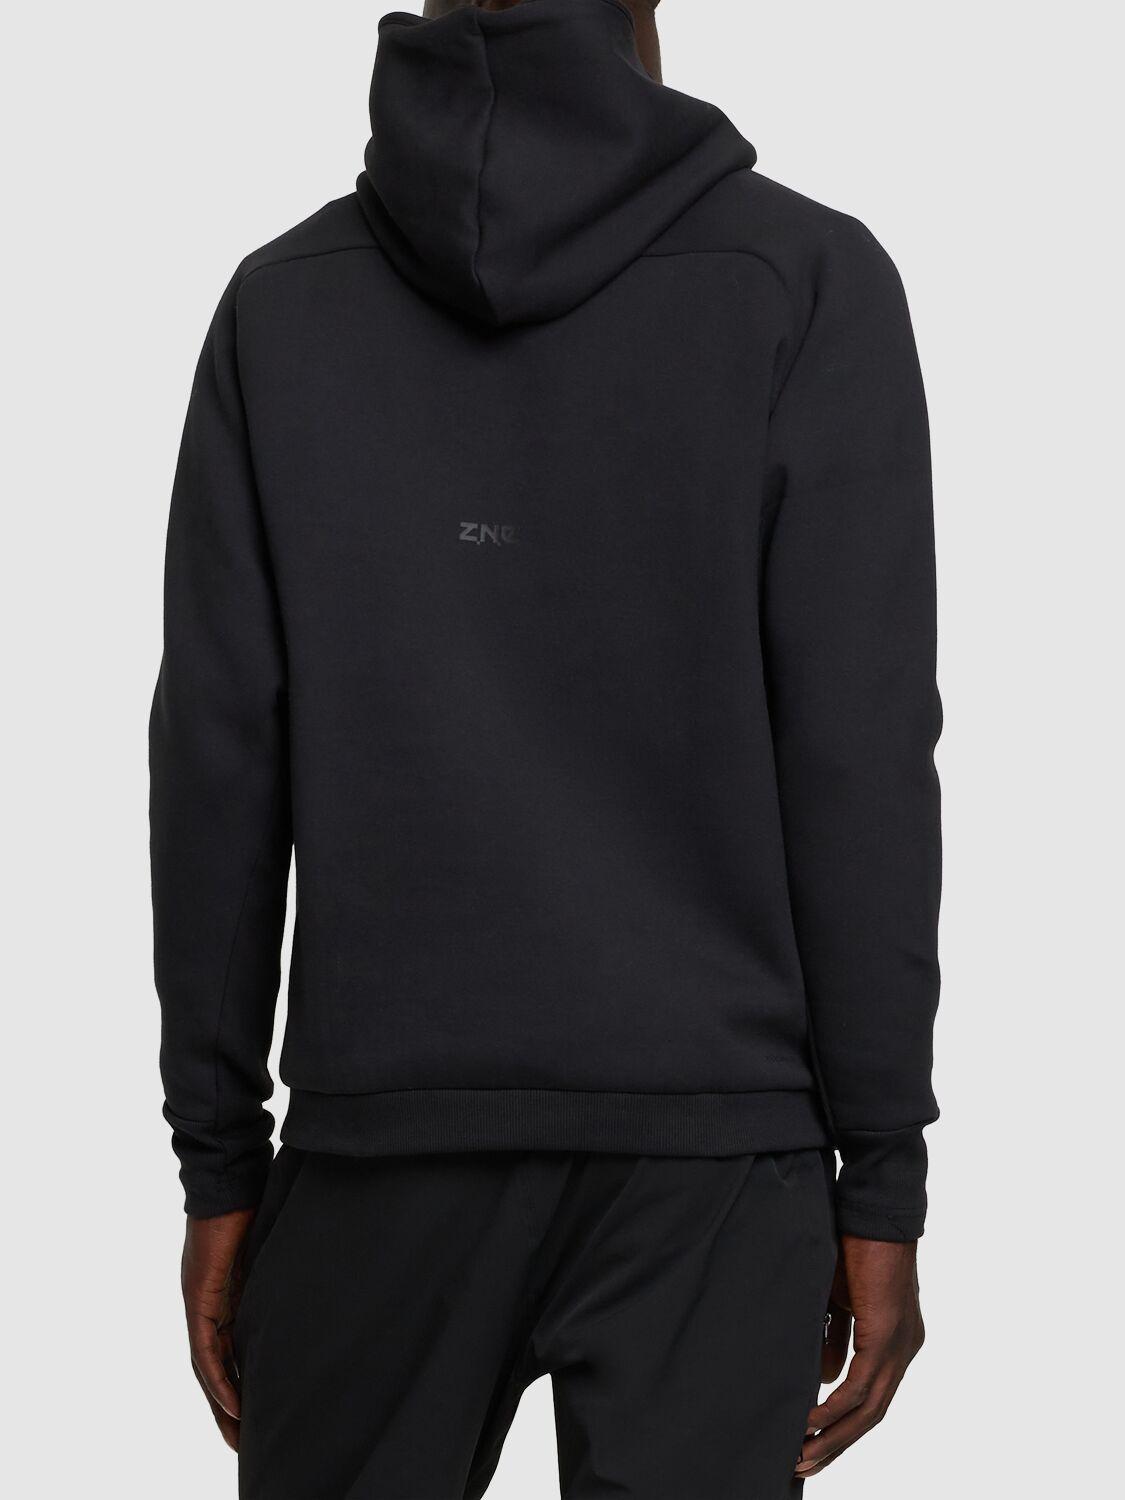 adidas Originals Zone Sweatshirt Hoodie in Black for Men | Lyst